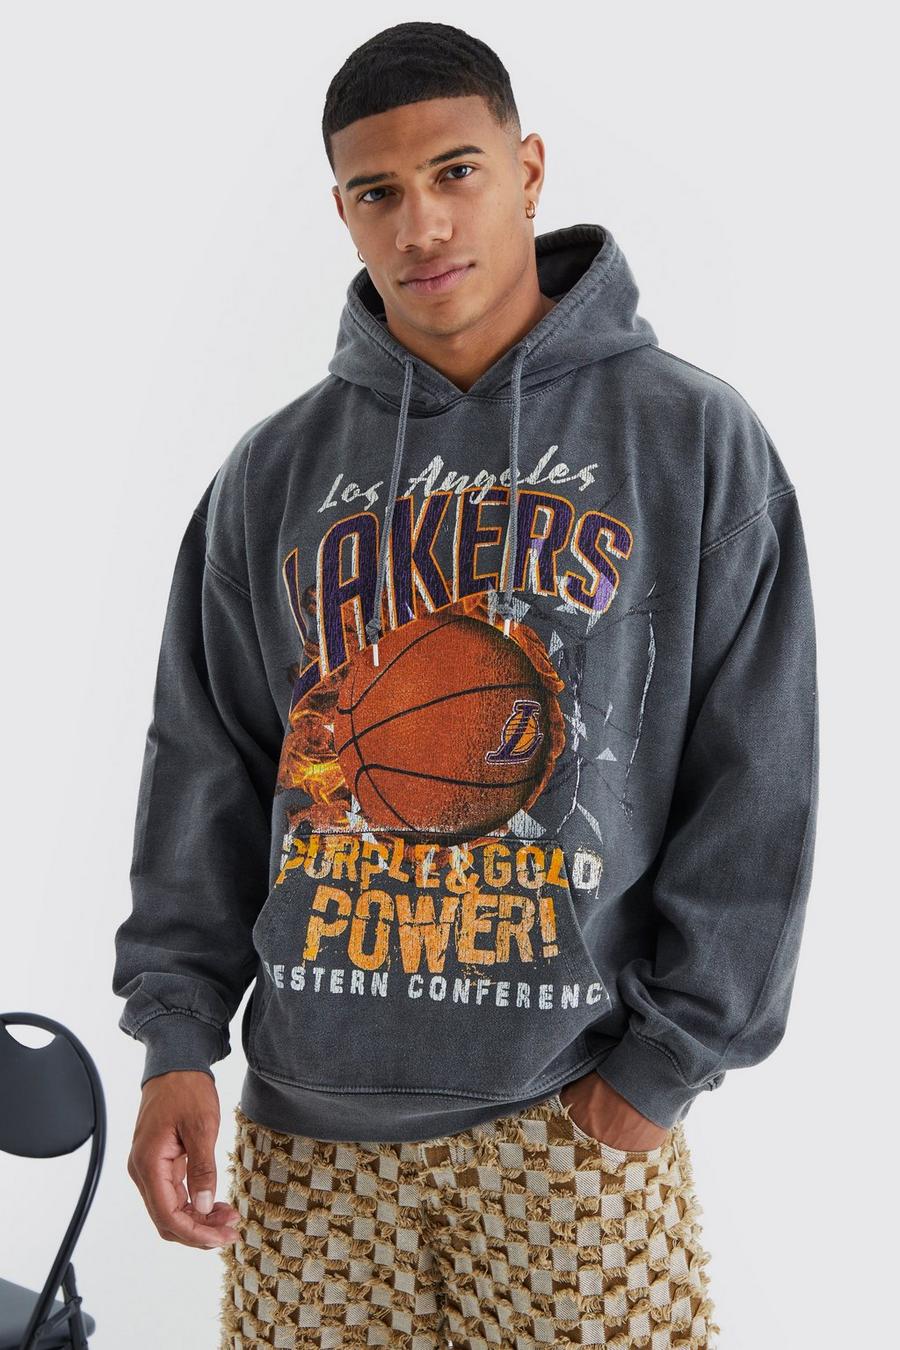 LA Lakers NBA Basketball Graphic Shirt, hoodie, longsleeve, sweater